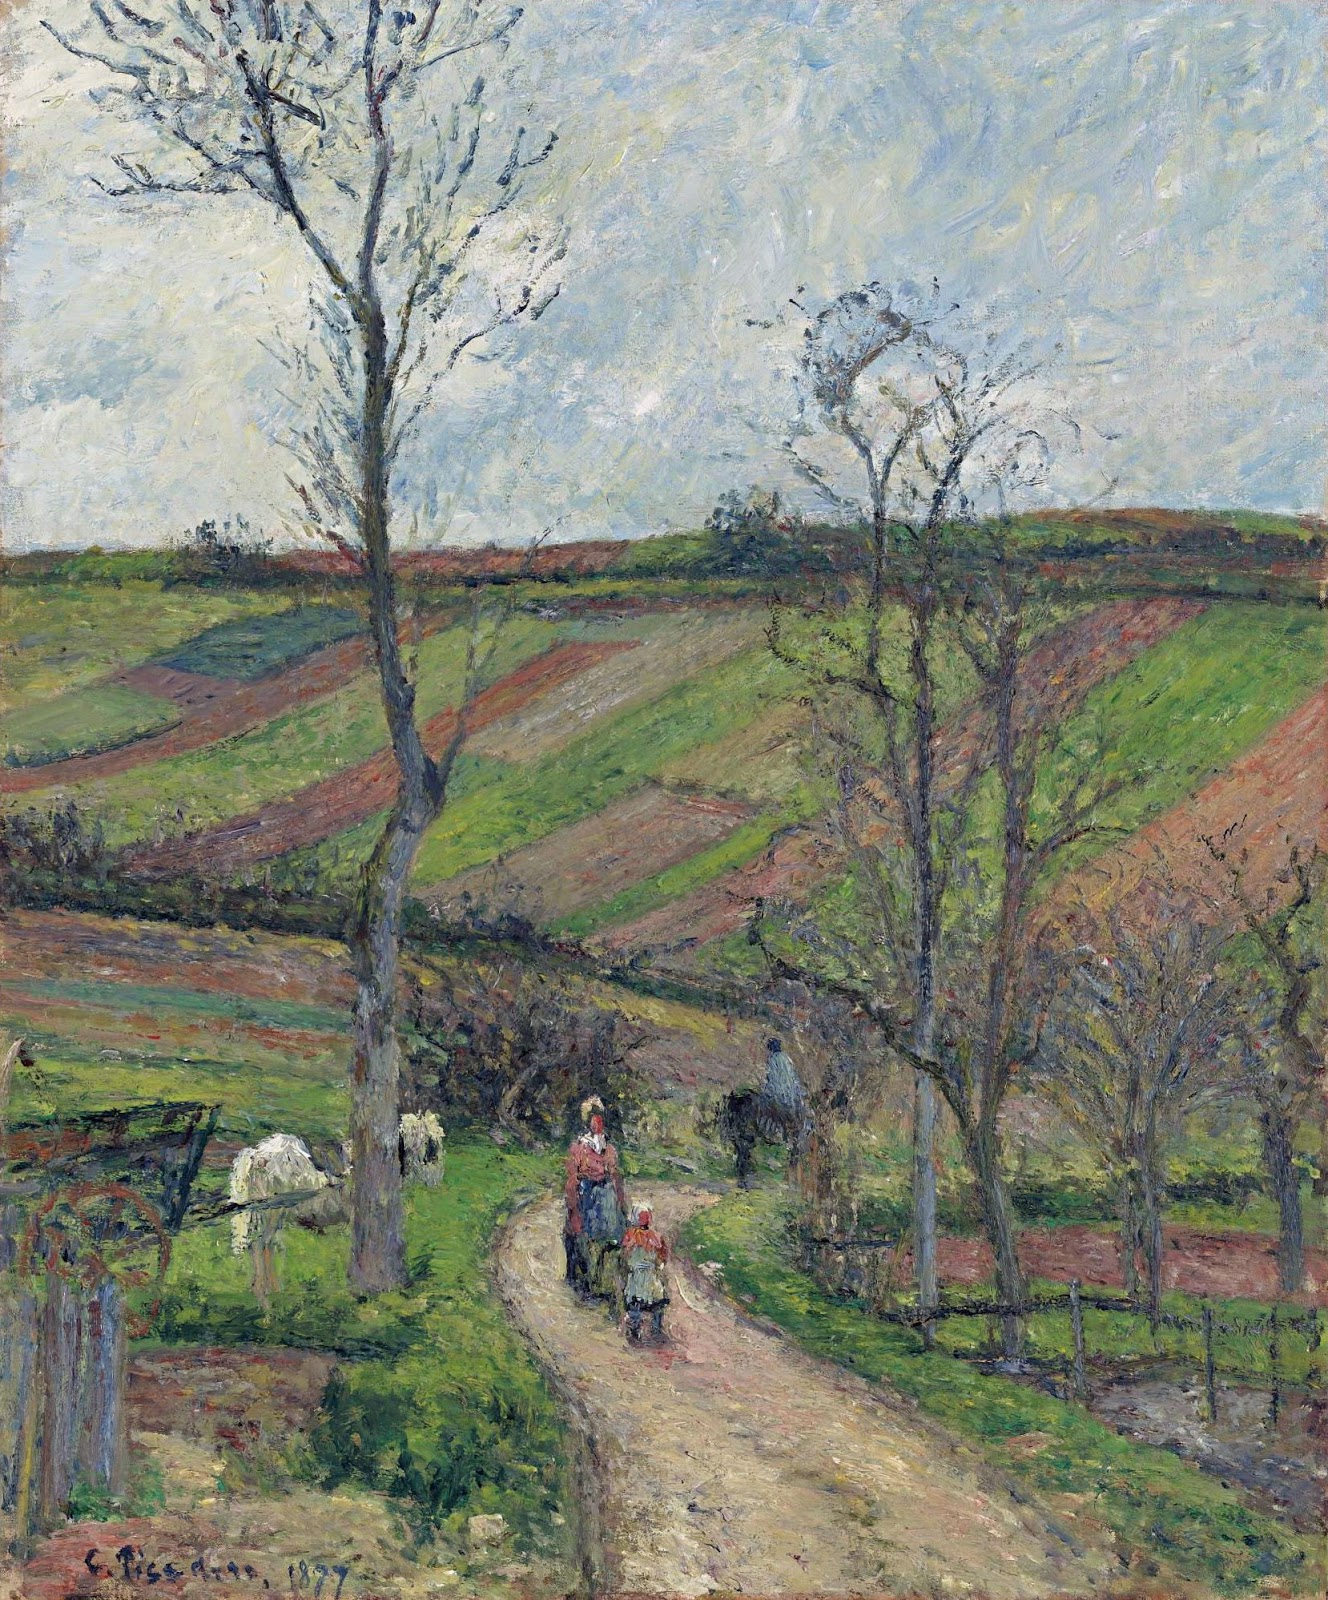 Camille+Pissarro-1830-1903 (400).jpg